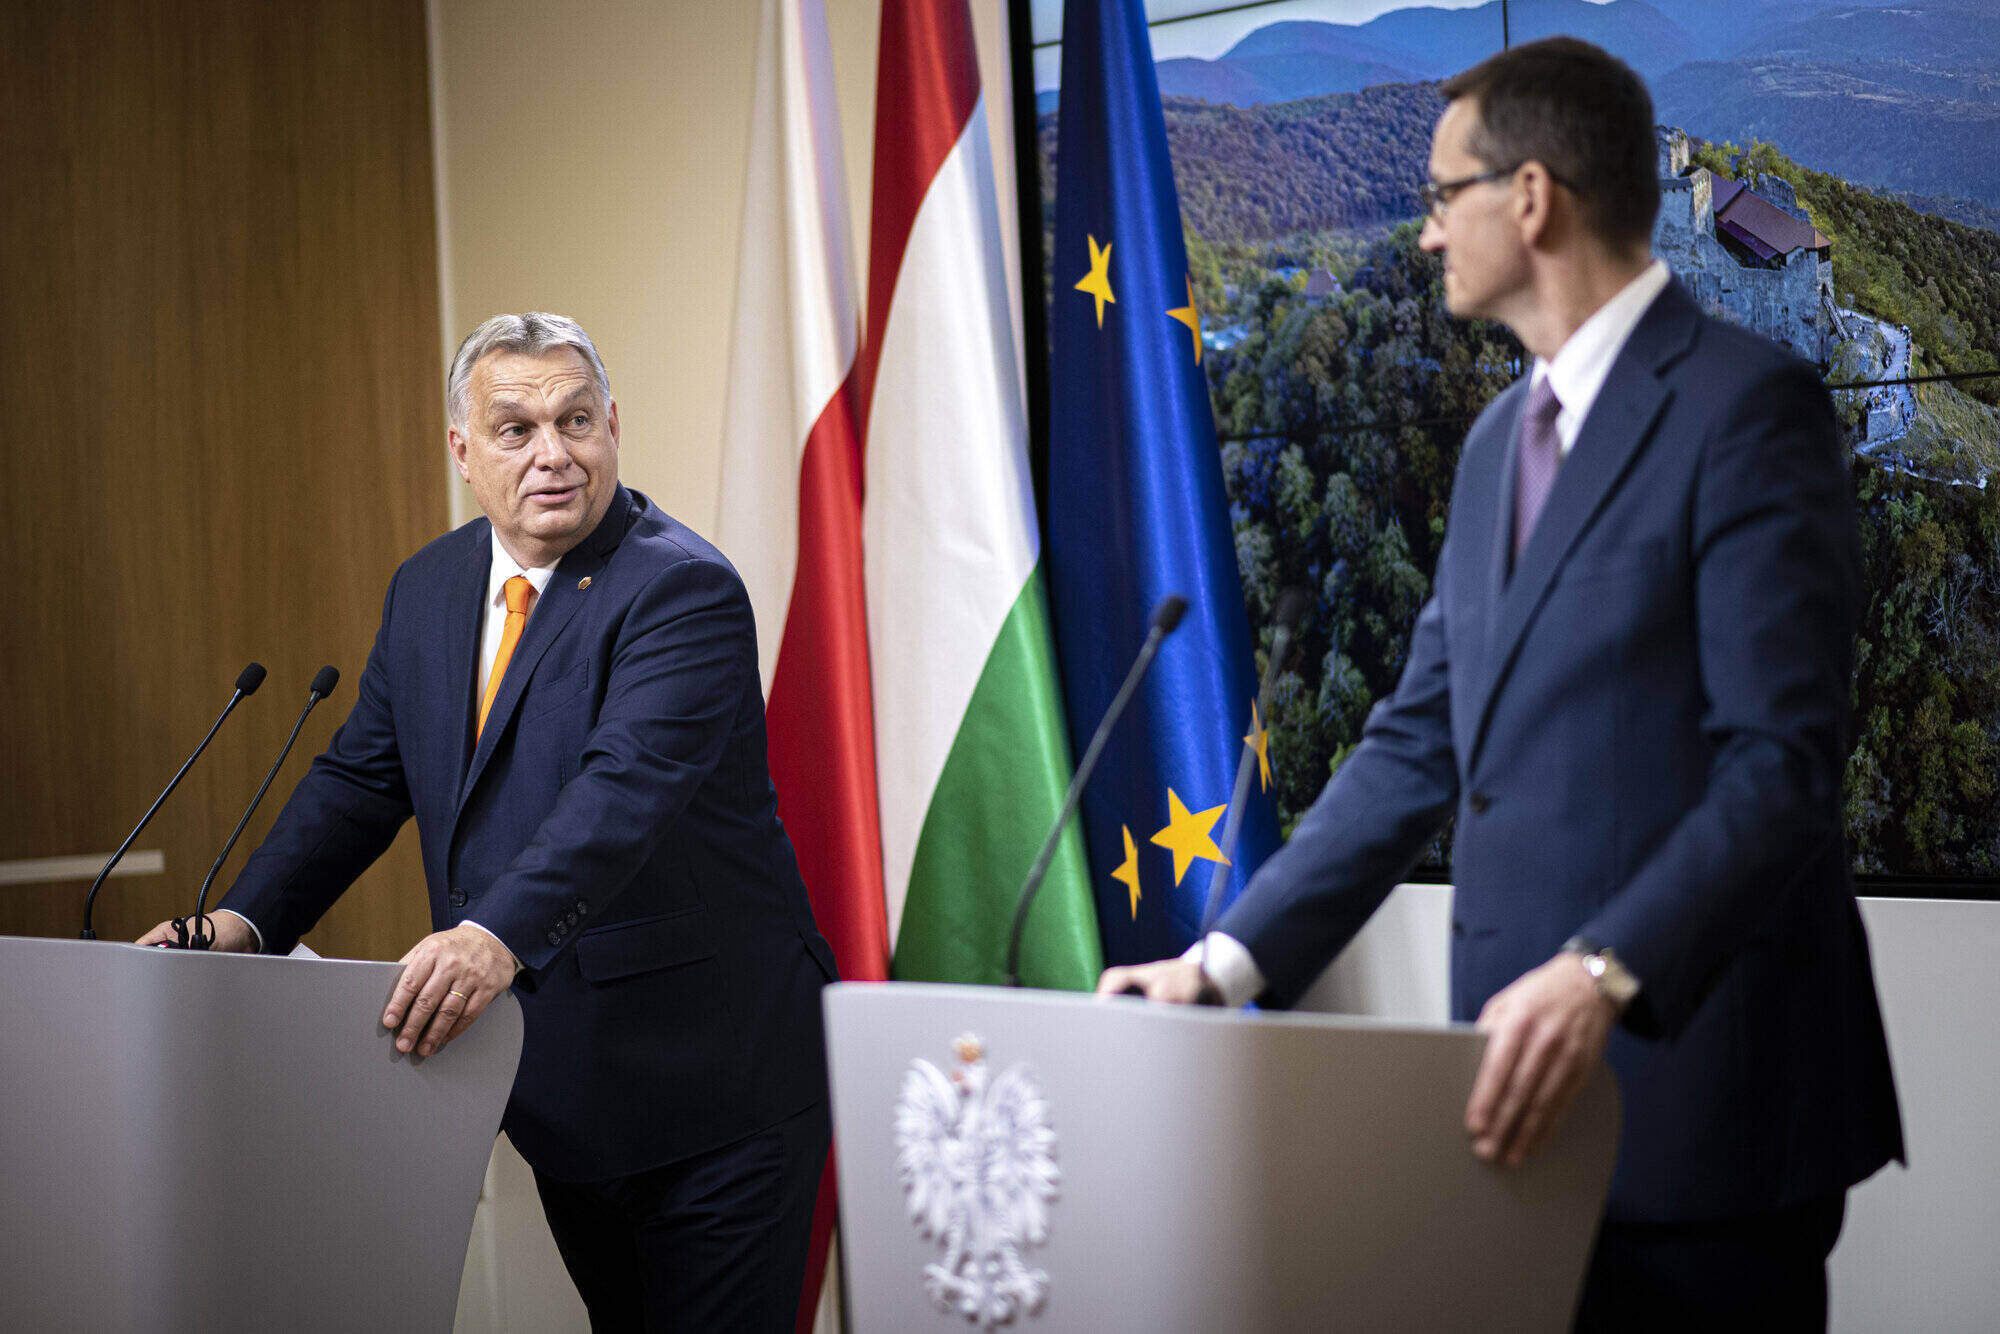 orbán morawiecki eu 予算拒否権